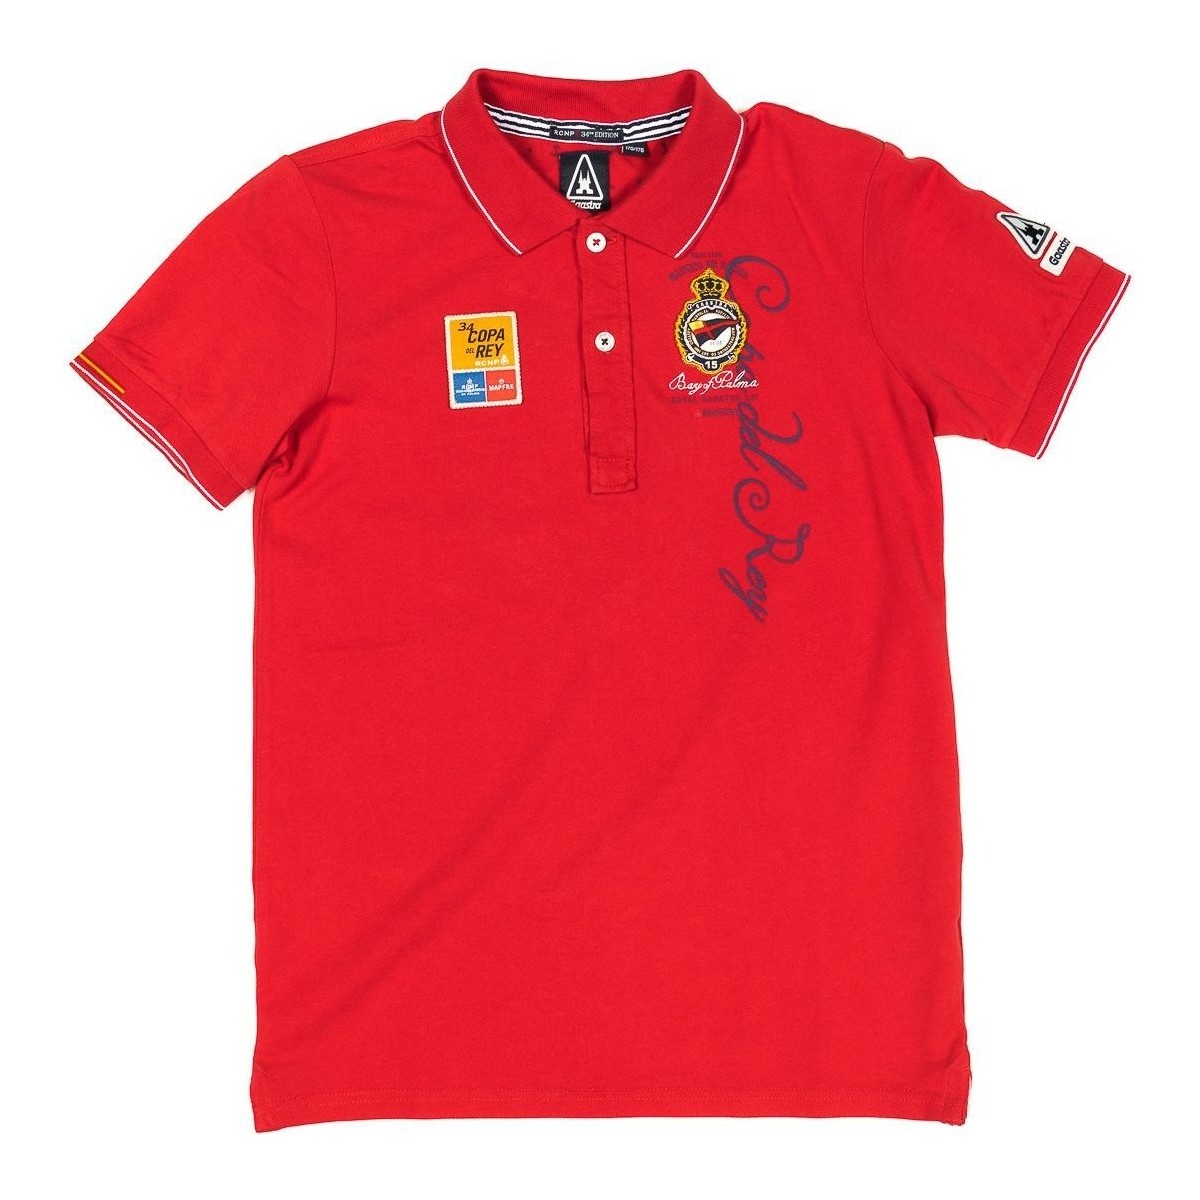 textil Børn Polo-t-shirts m. korte ærmer Gaastra 37700054-D20 Rød